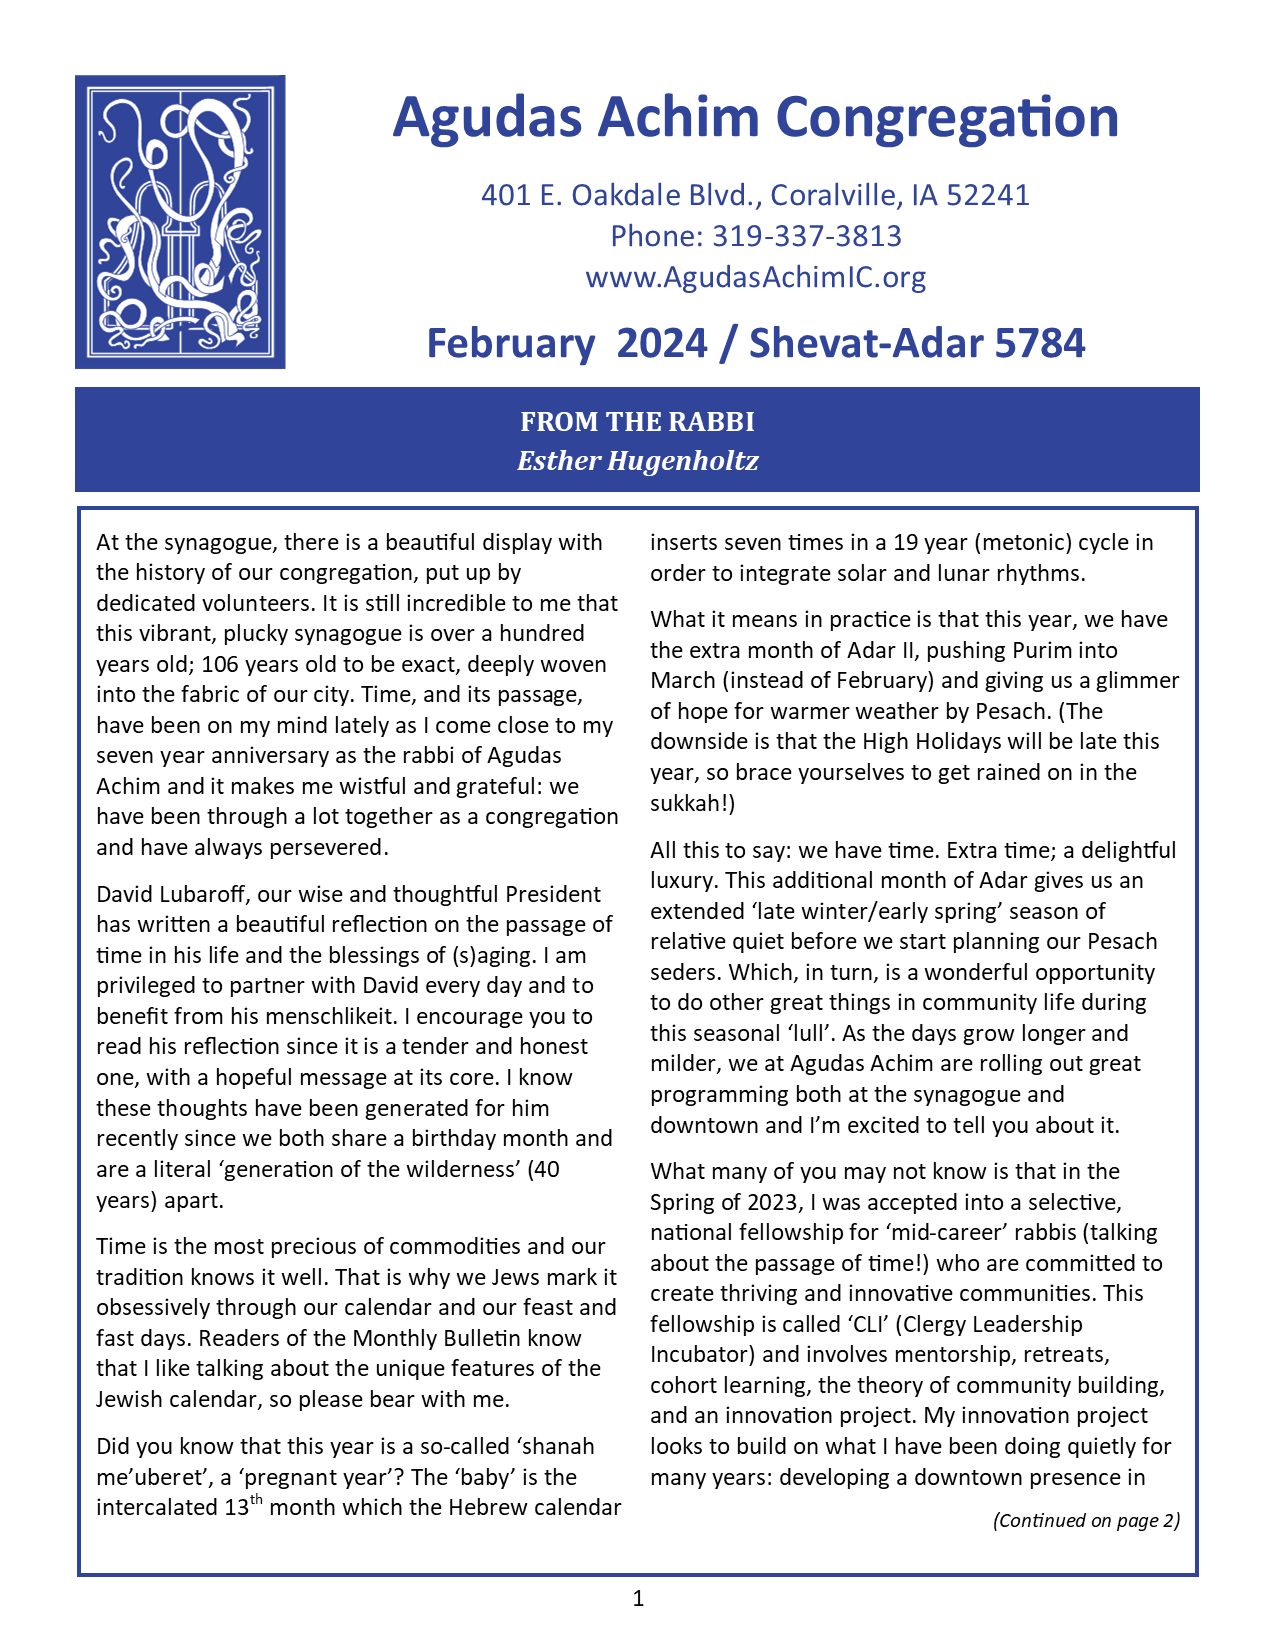 February 2024 Bulletin